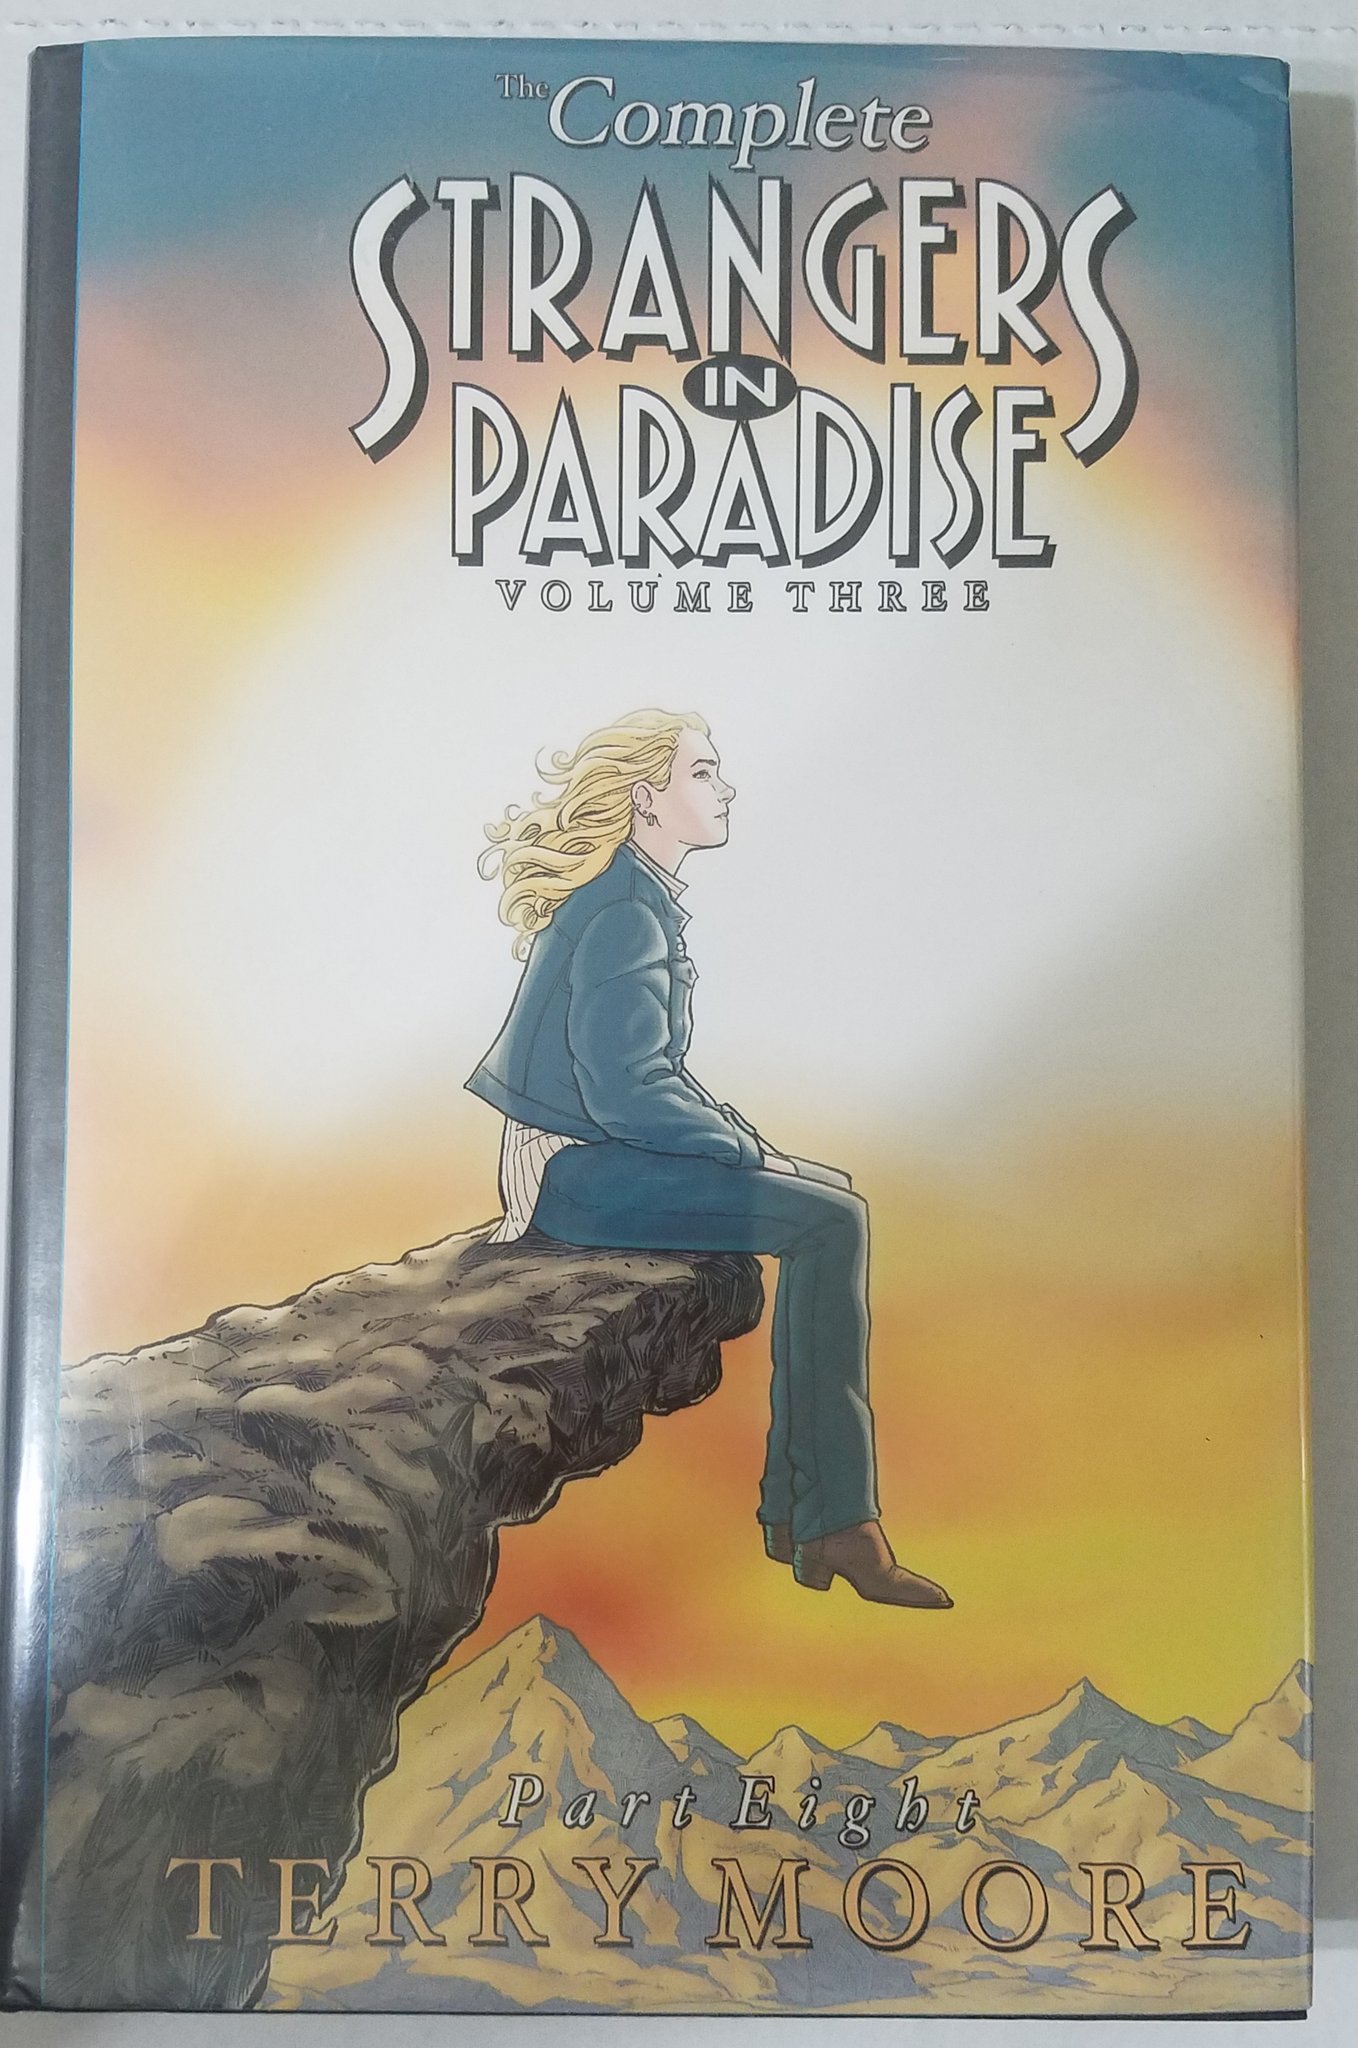 Strangers In Paradise Volume III Part 8 (Complete Strangers in Paradise) (v. 3, Pt. 8) - Terry Moore